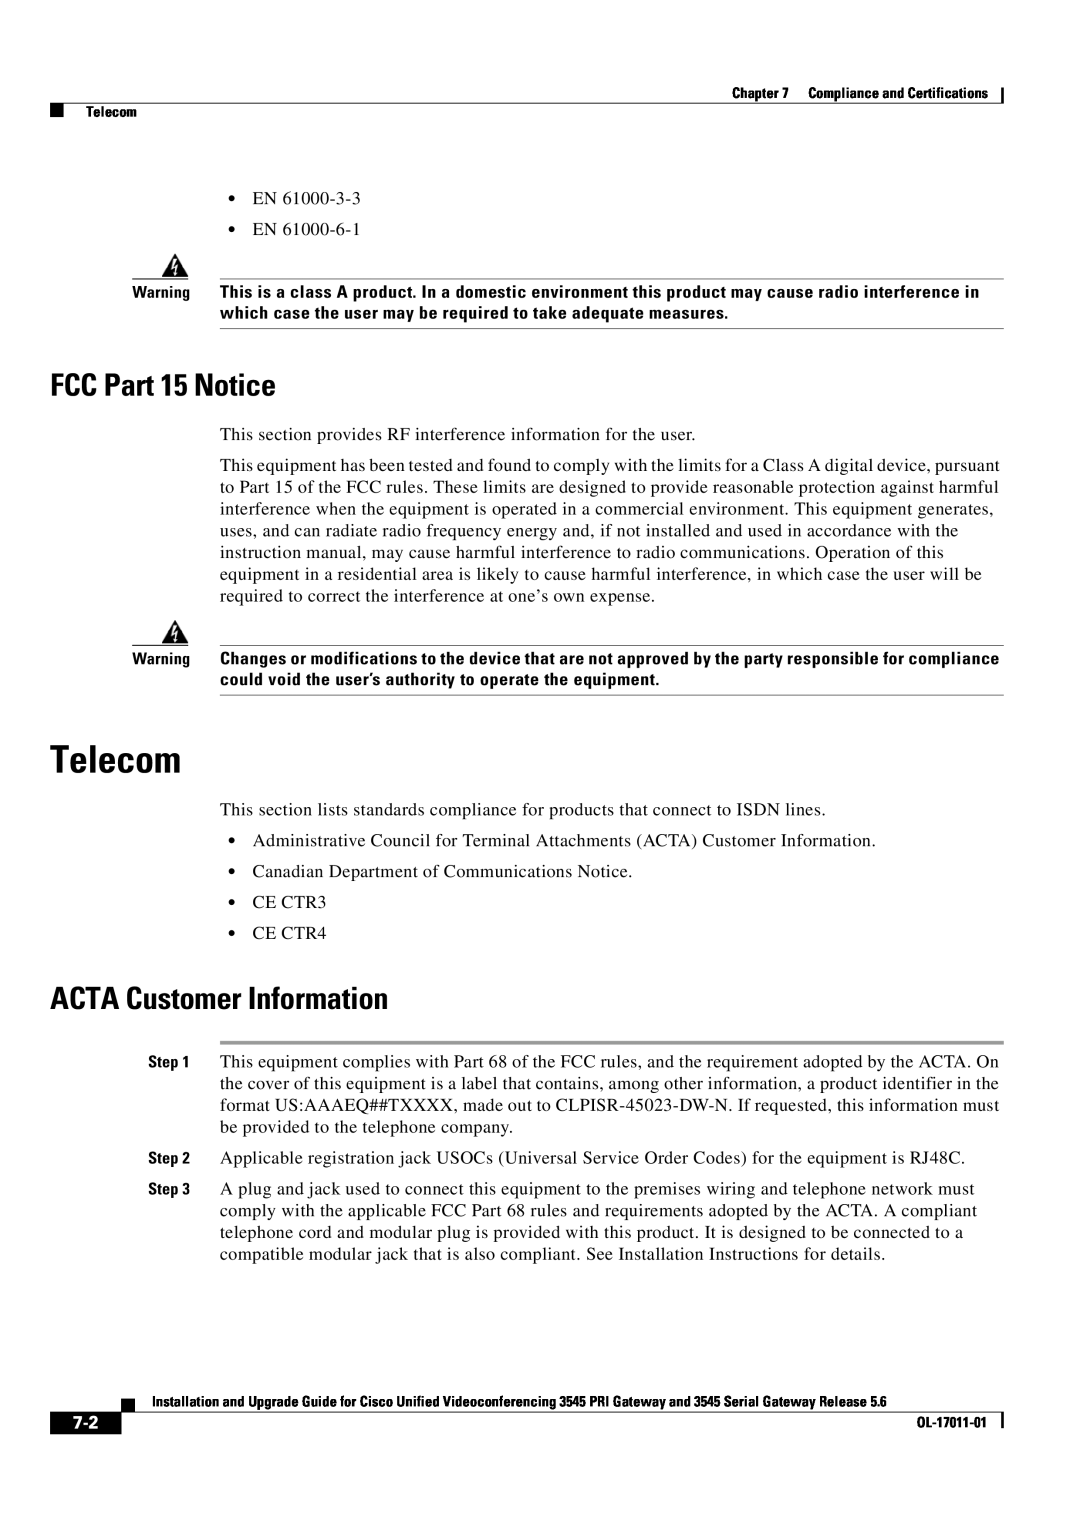 Cisco Systems 3545 PRI, 3545 Serial manual Telecom, FCC Part 15 Notice, ACTA Customer Information 